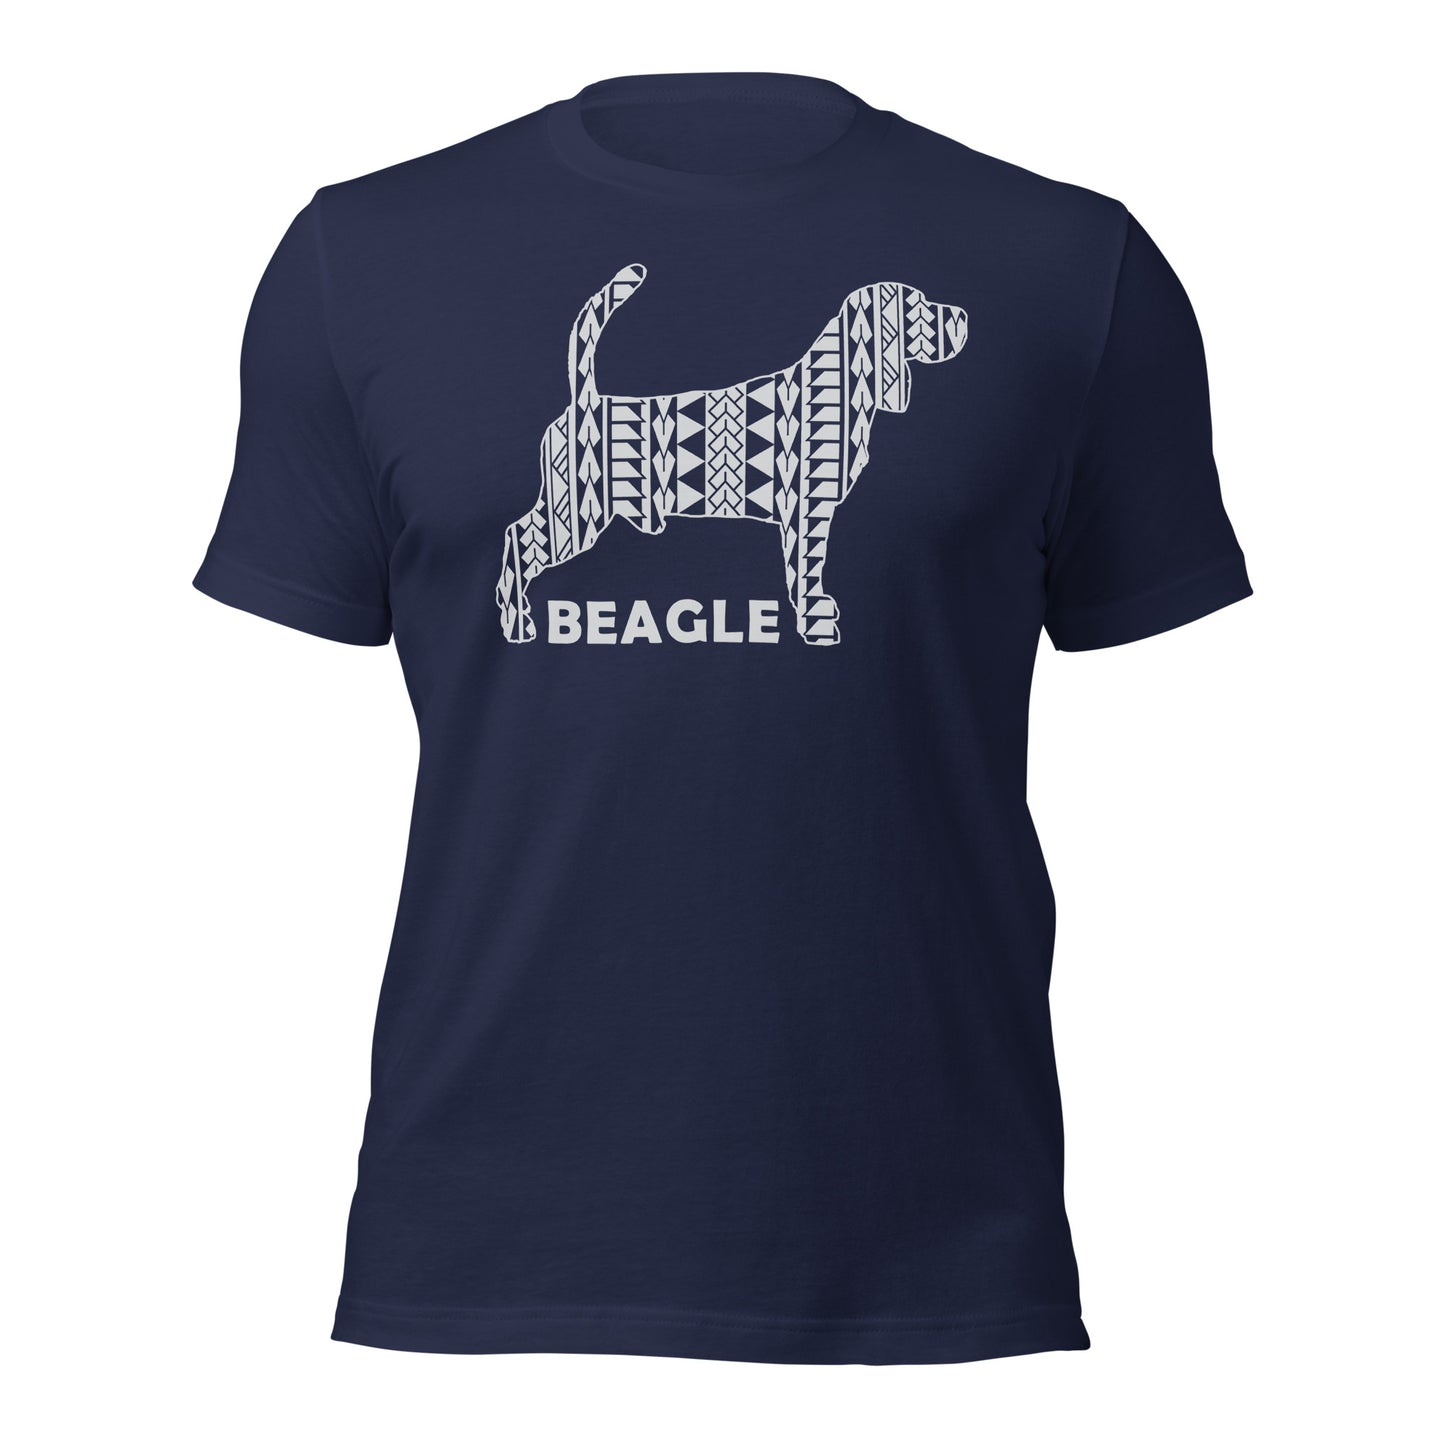 Beagle Polynesian t-shirt navy by Dog Artistry.